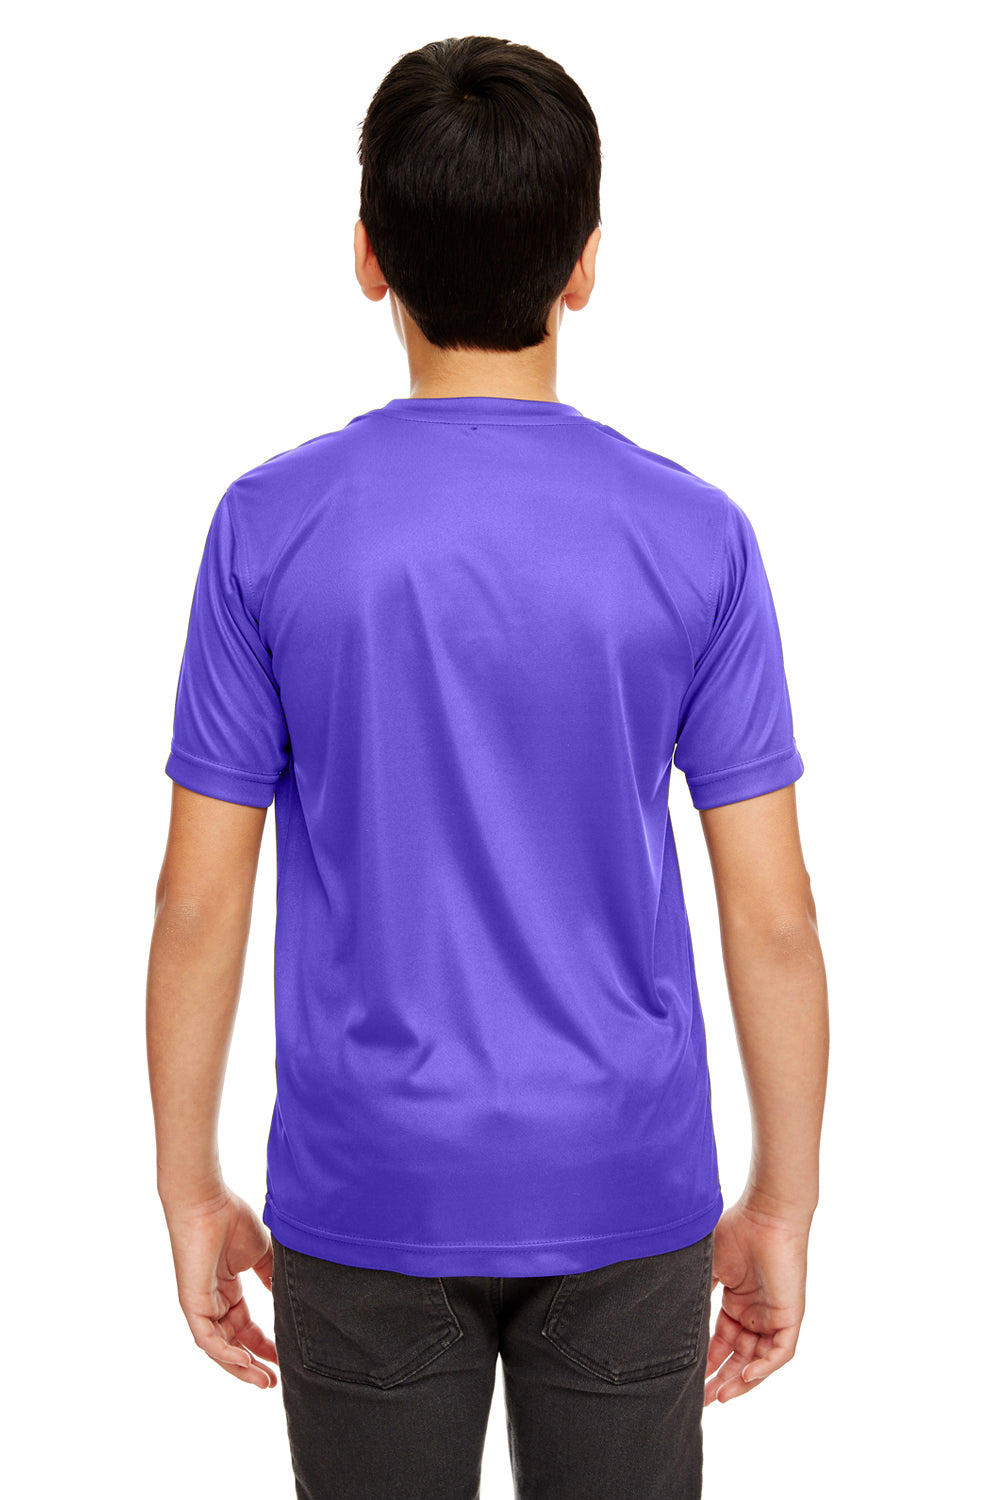 UltraClub 8420Y Youth Cool & Dry Performance Moisture Wicking Short Sleeve Crewneck T-Shirt Purple Back